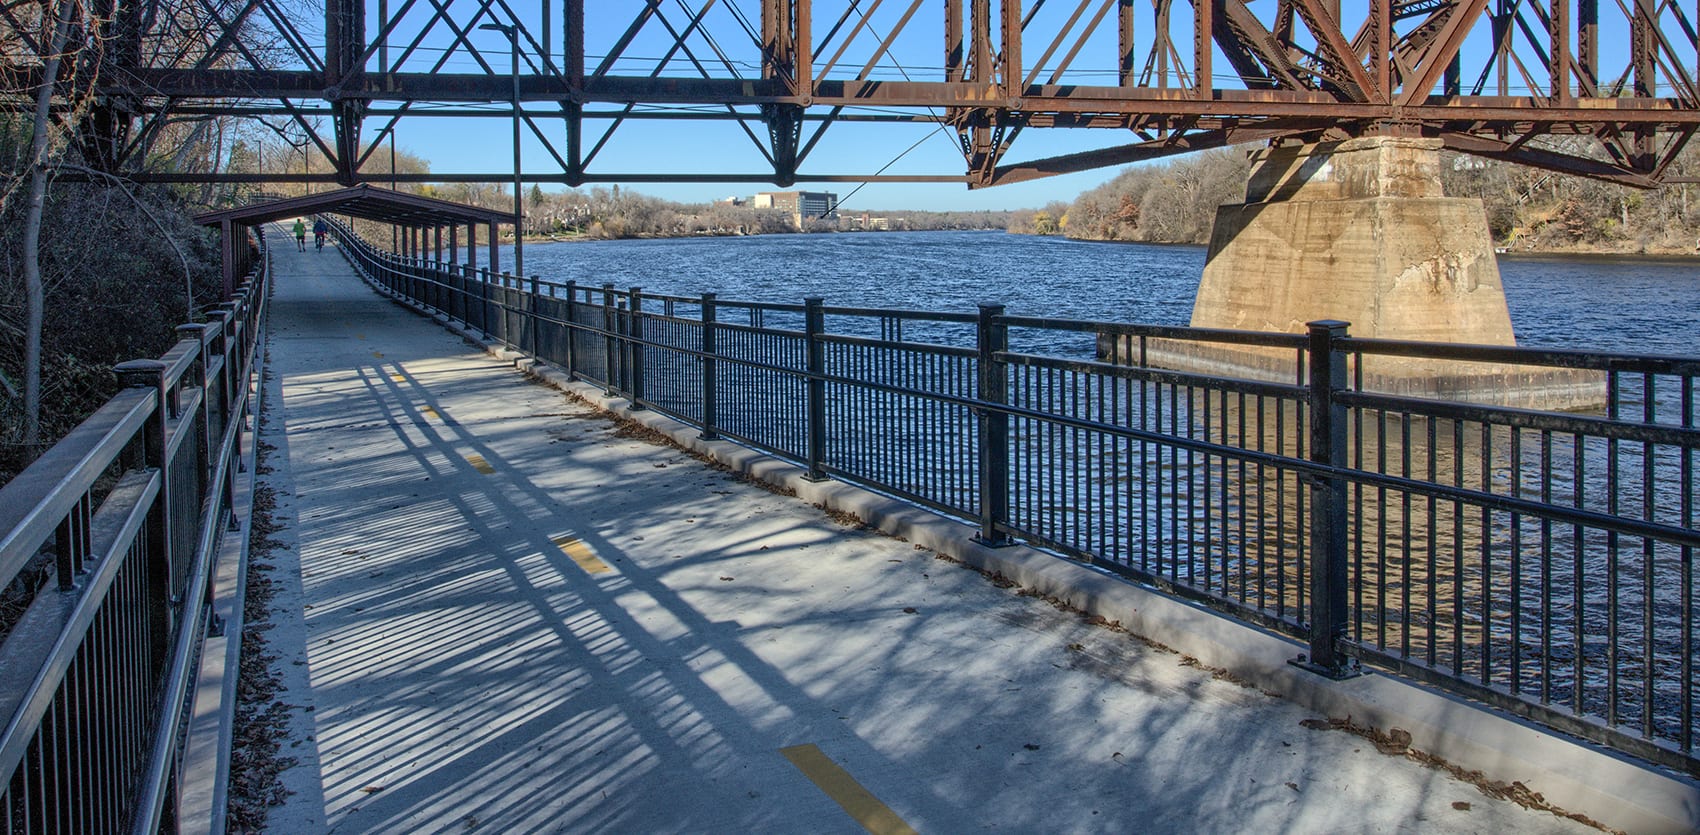 Beaver Island Bike Path and Pedestrian Bridge